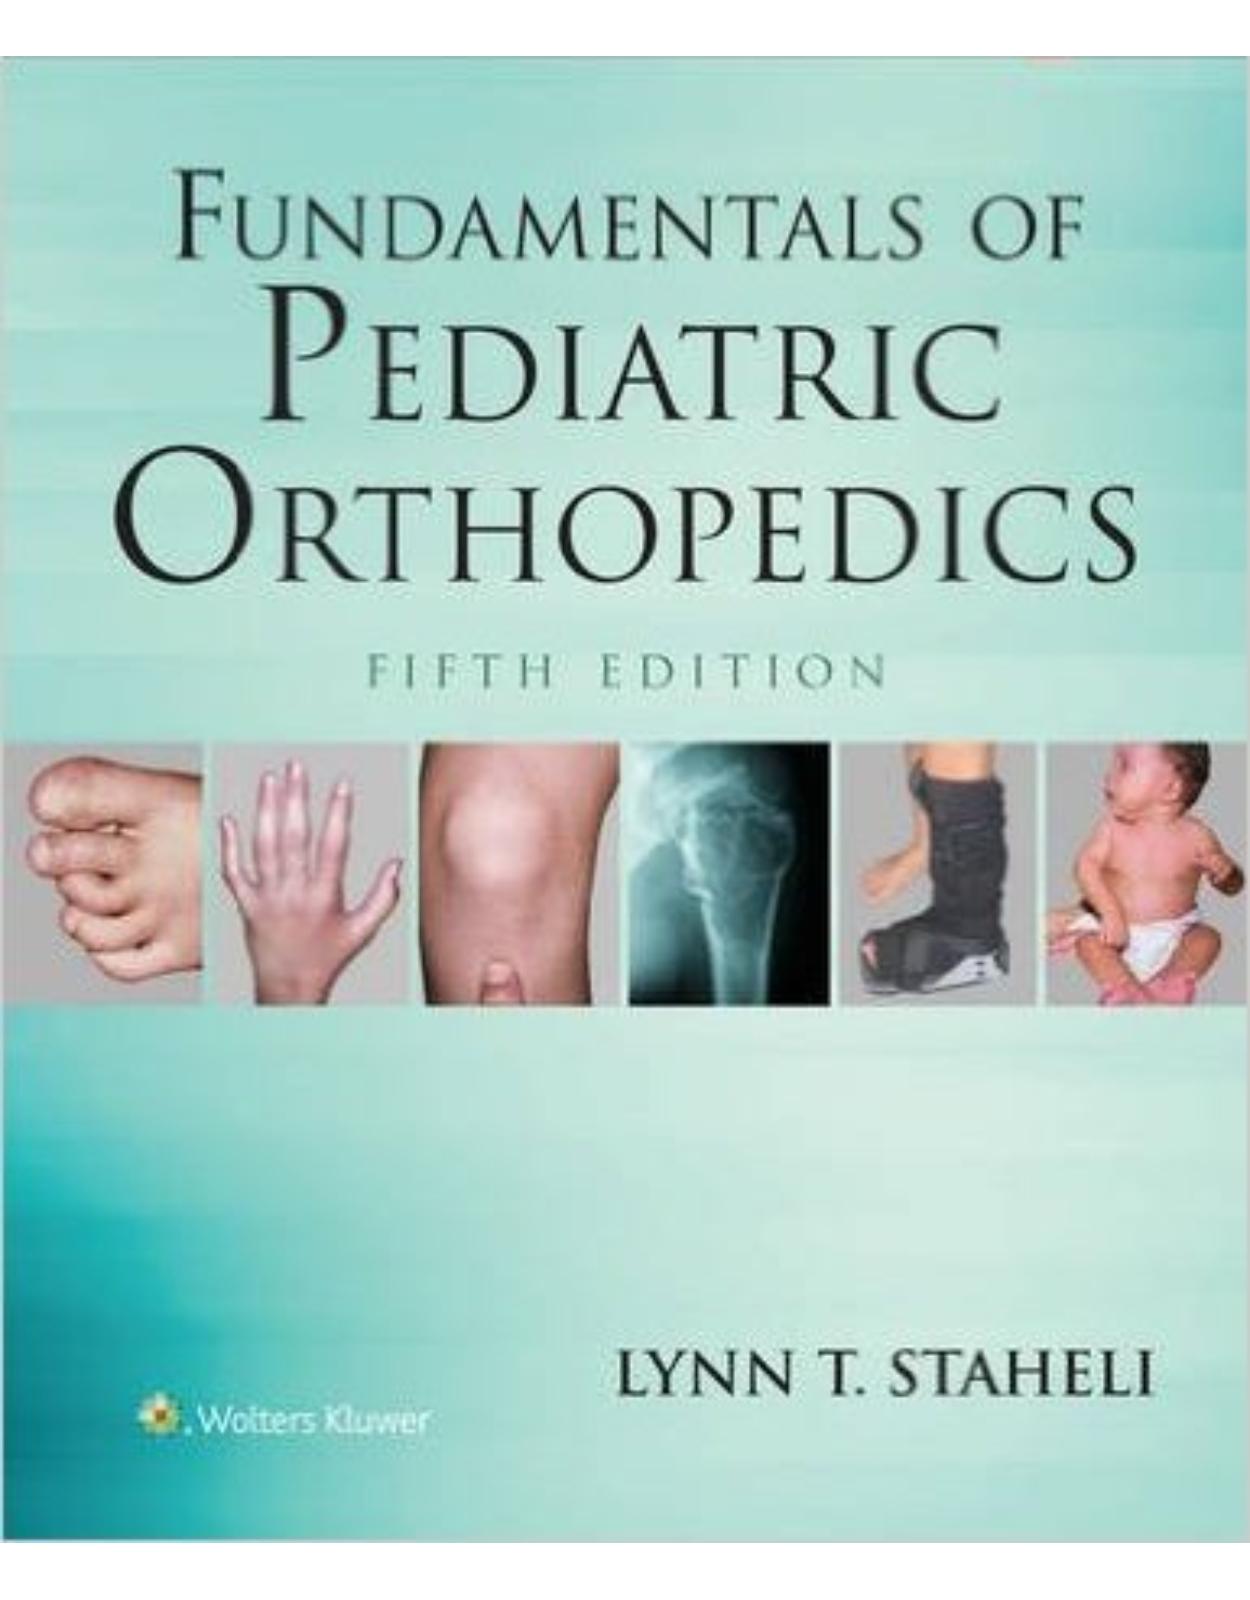 Fundamentals of Pediatric Orthopedics Fifth Edition